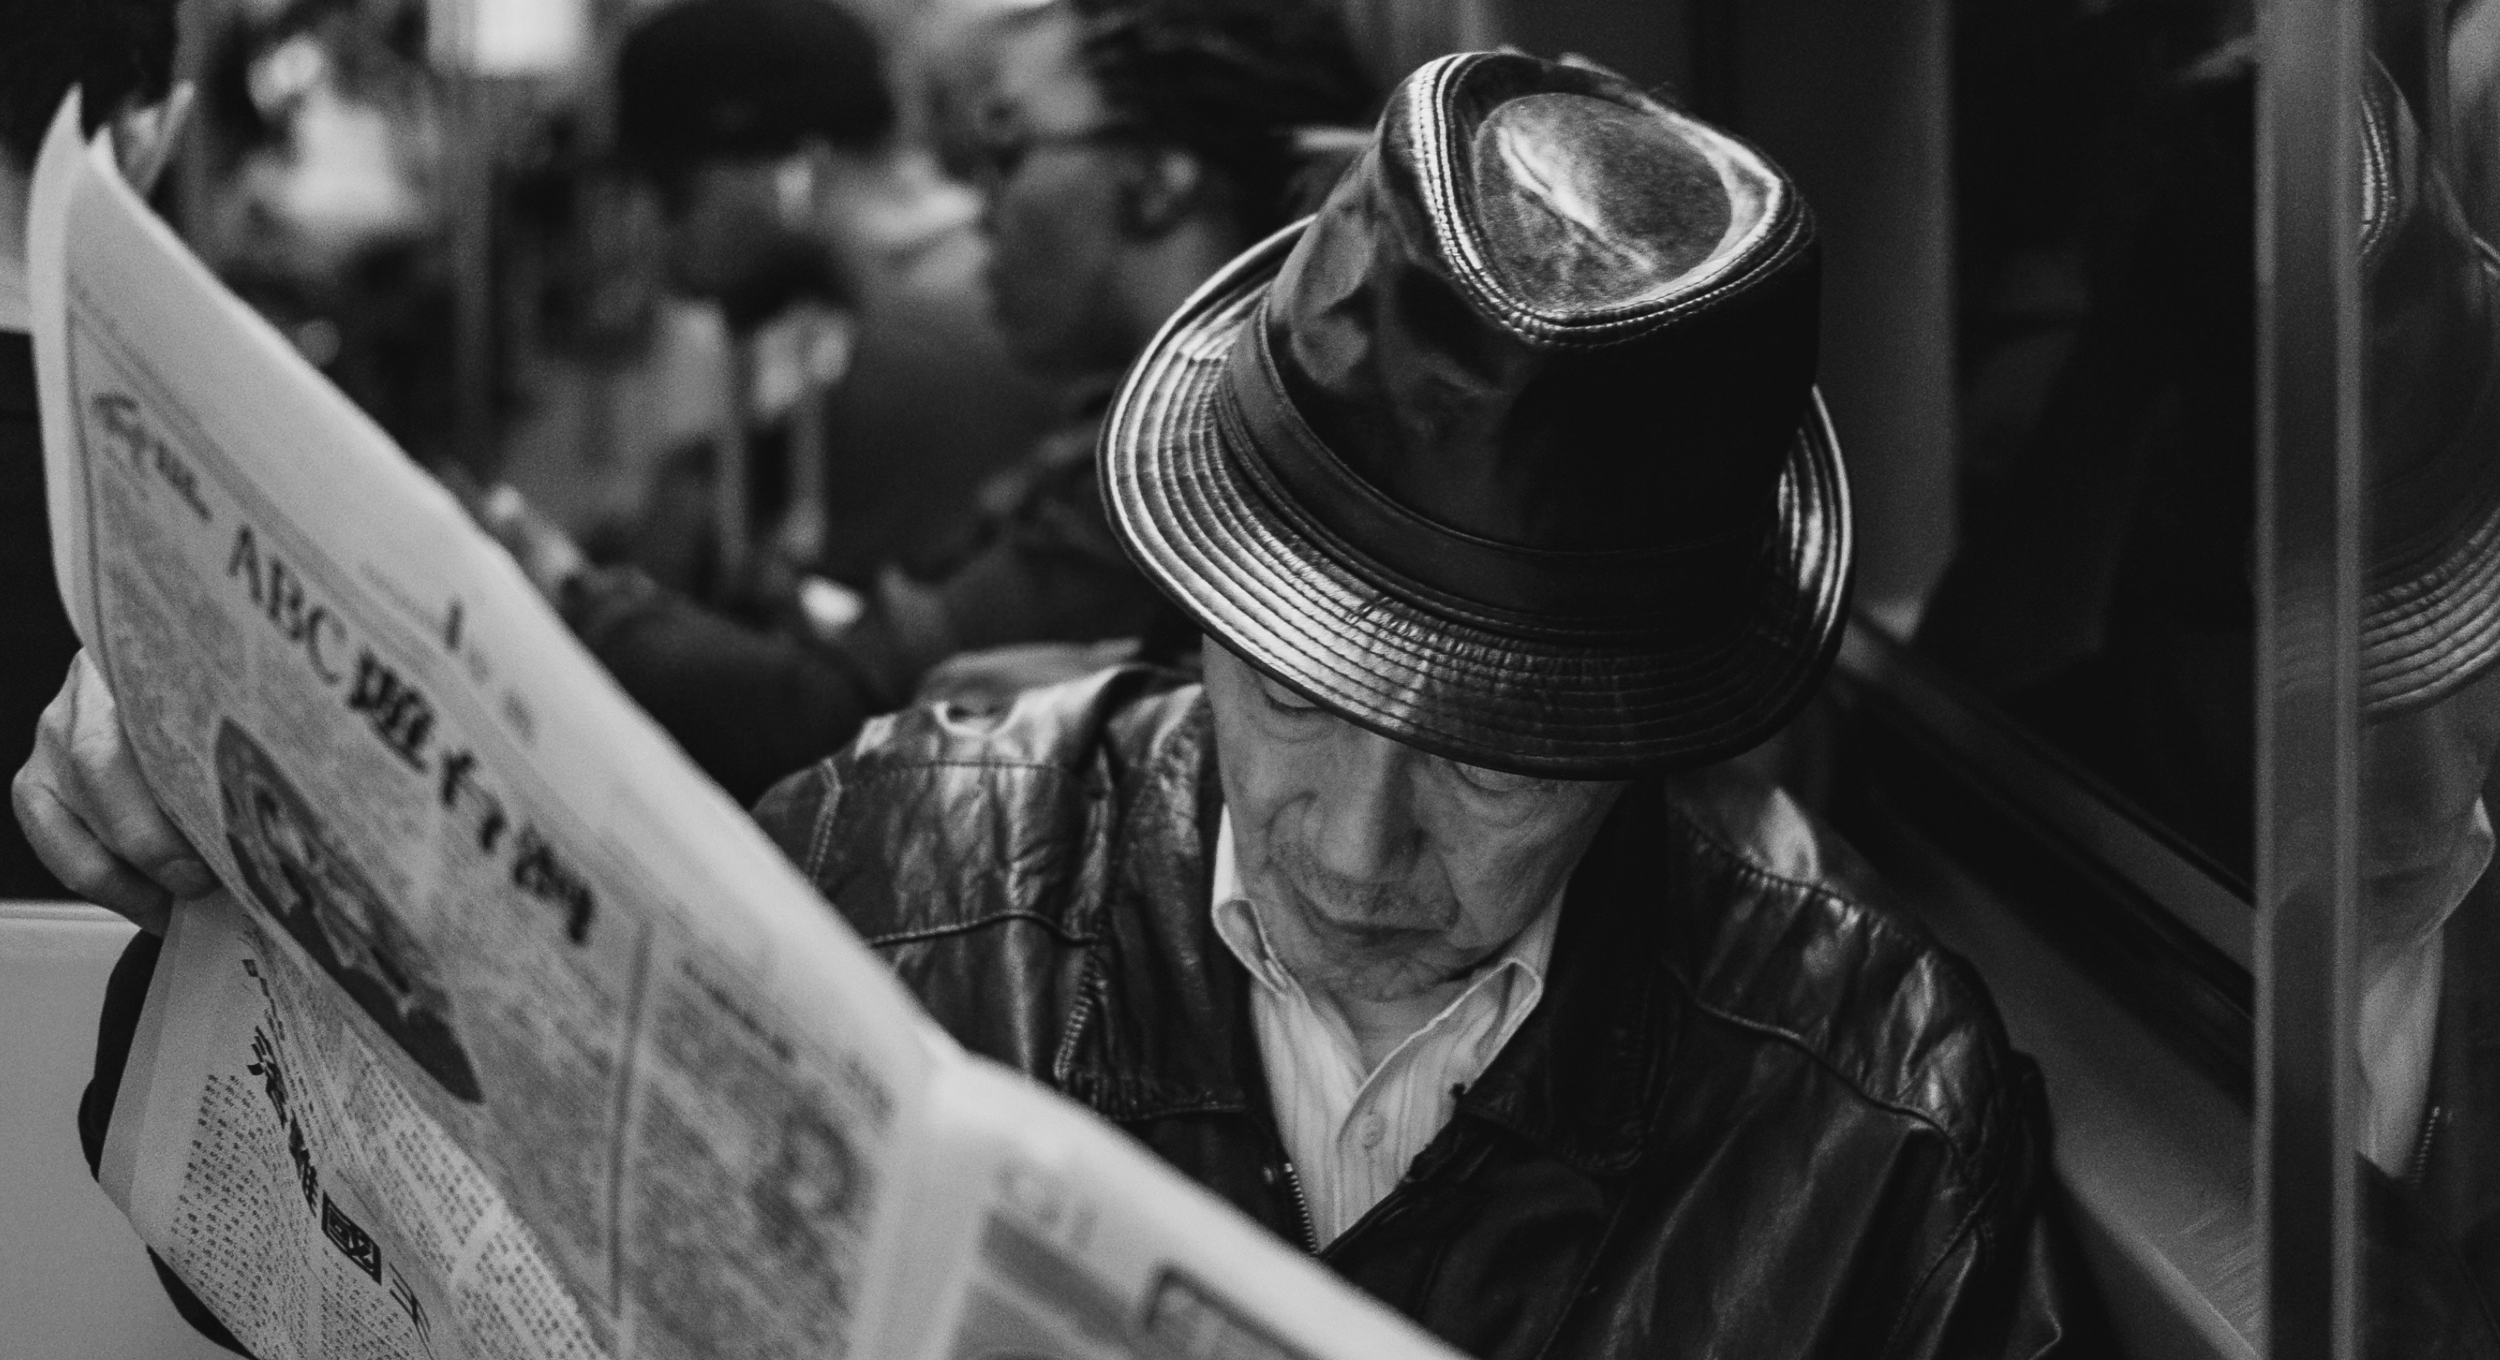 He read newspapers. When he heard the news he